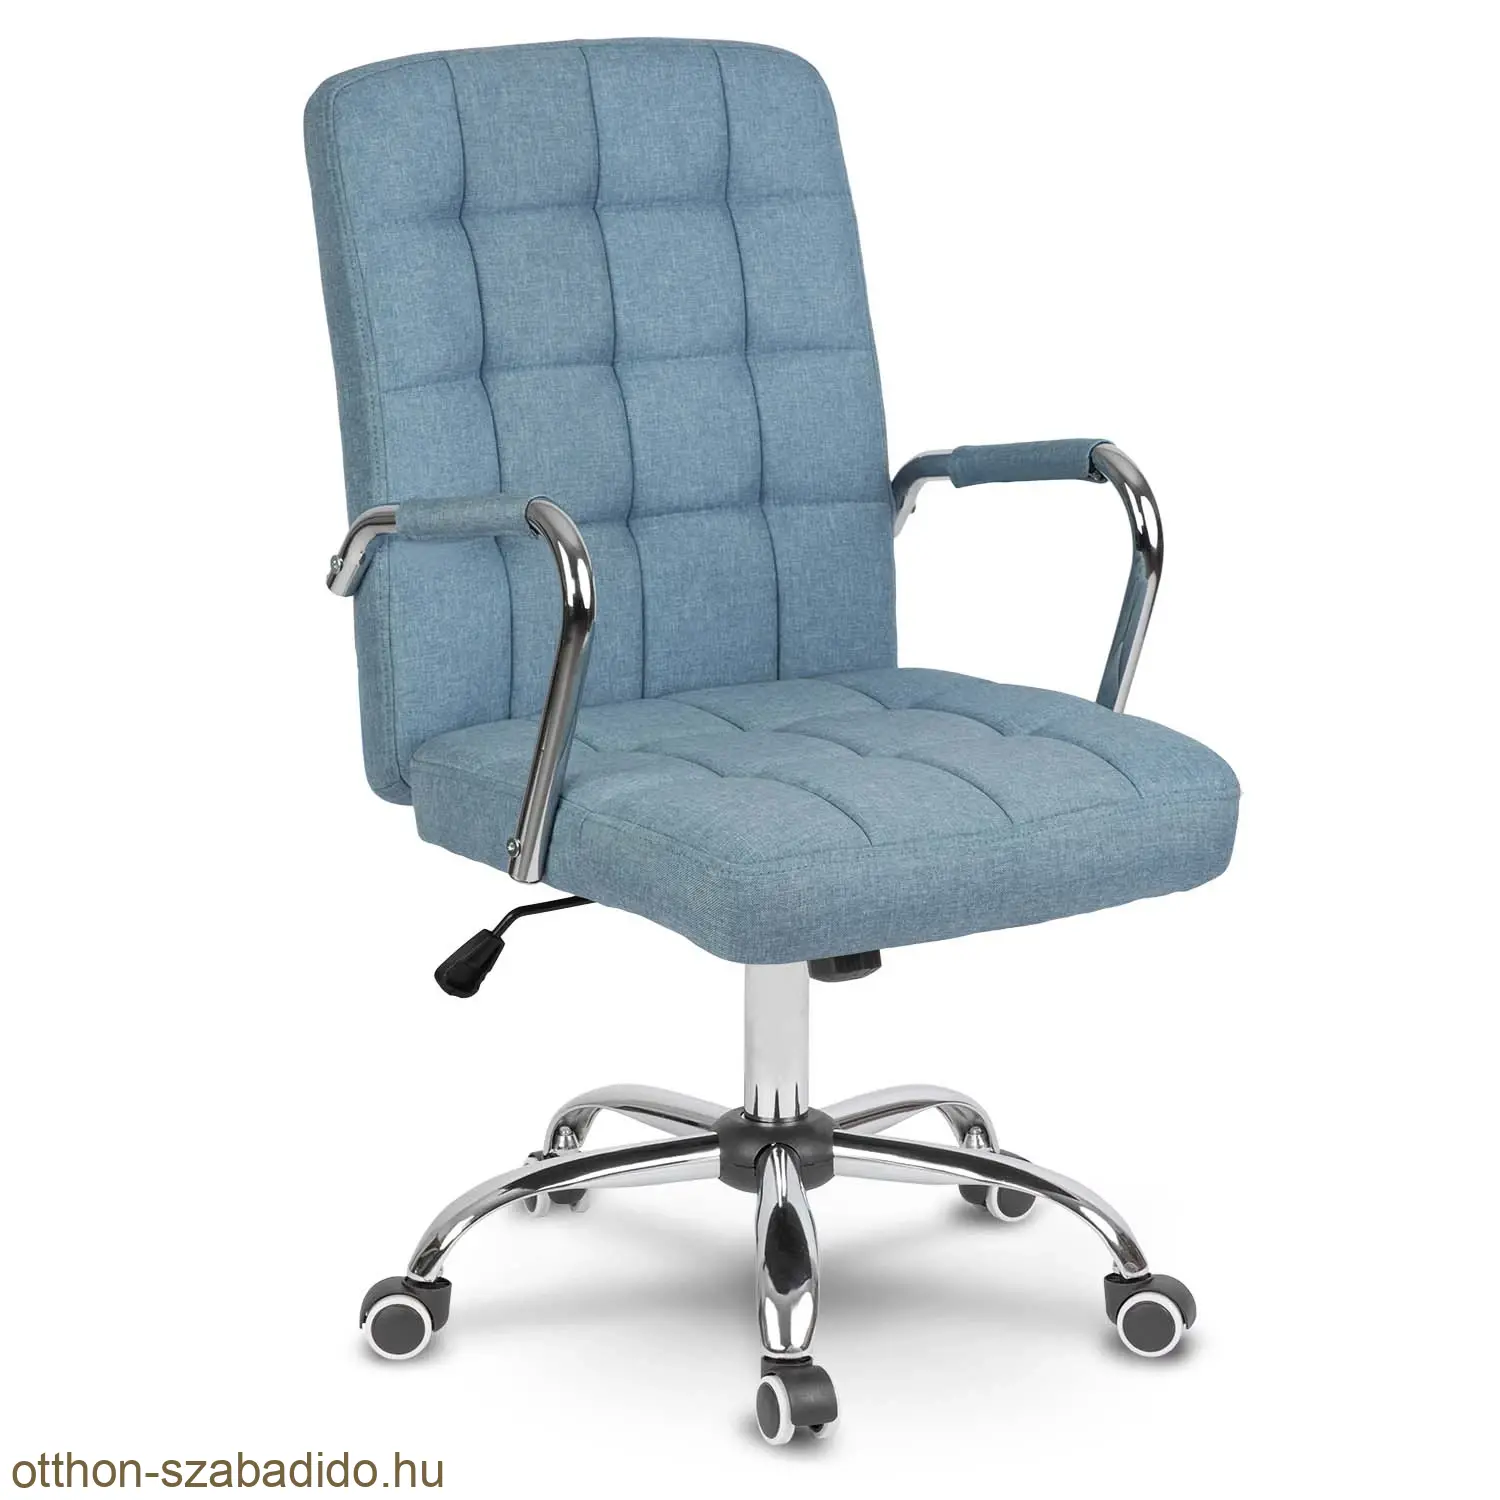 SOFOTEL Textil irodai szék Benton kék